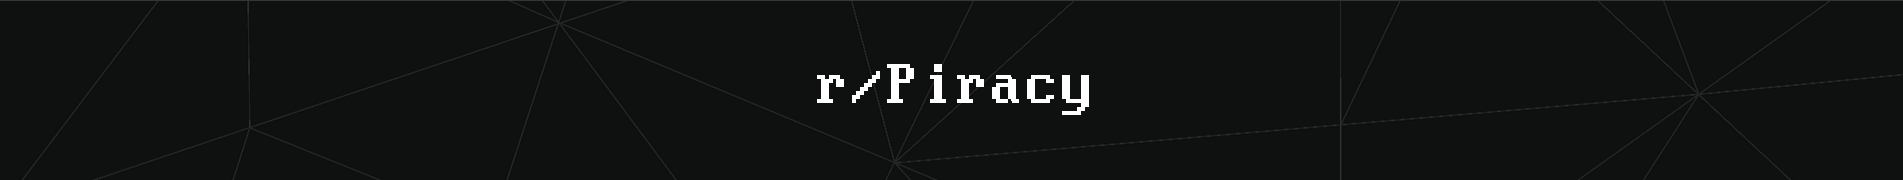 office 2016 download reddit piracy